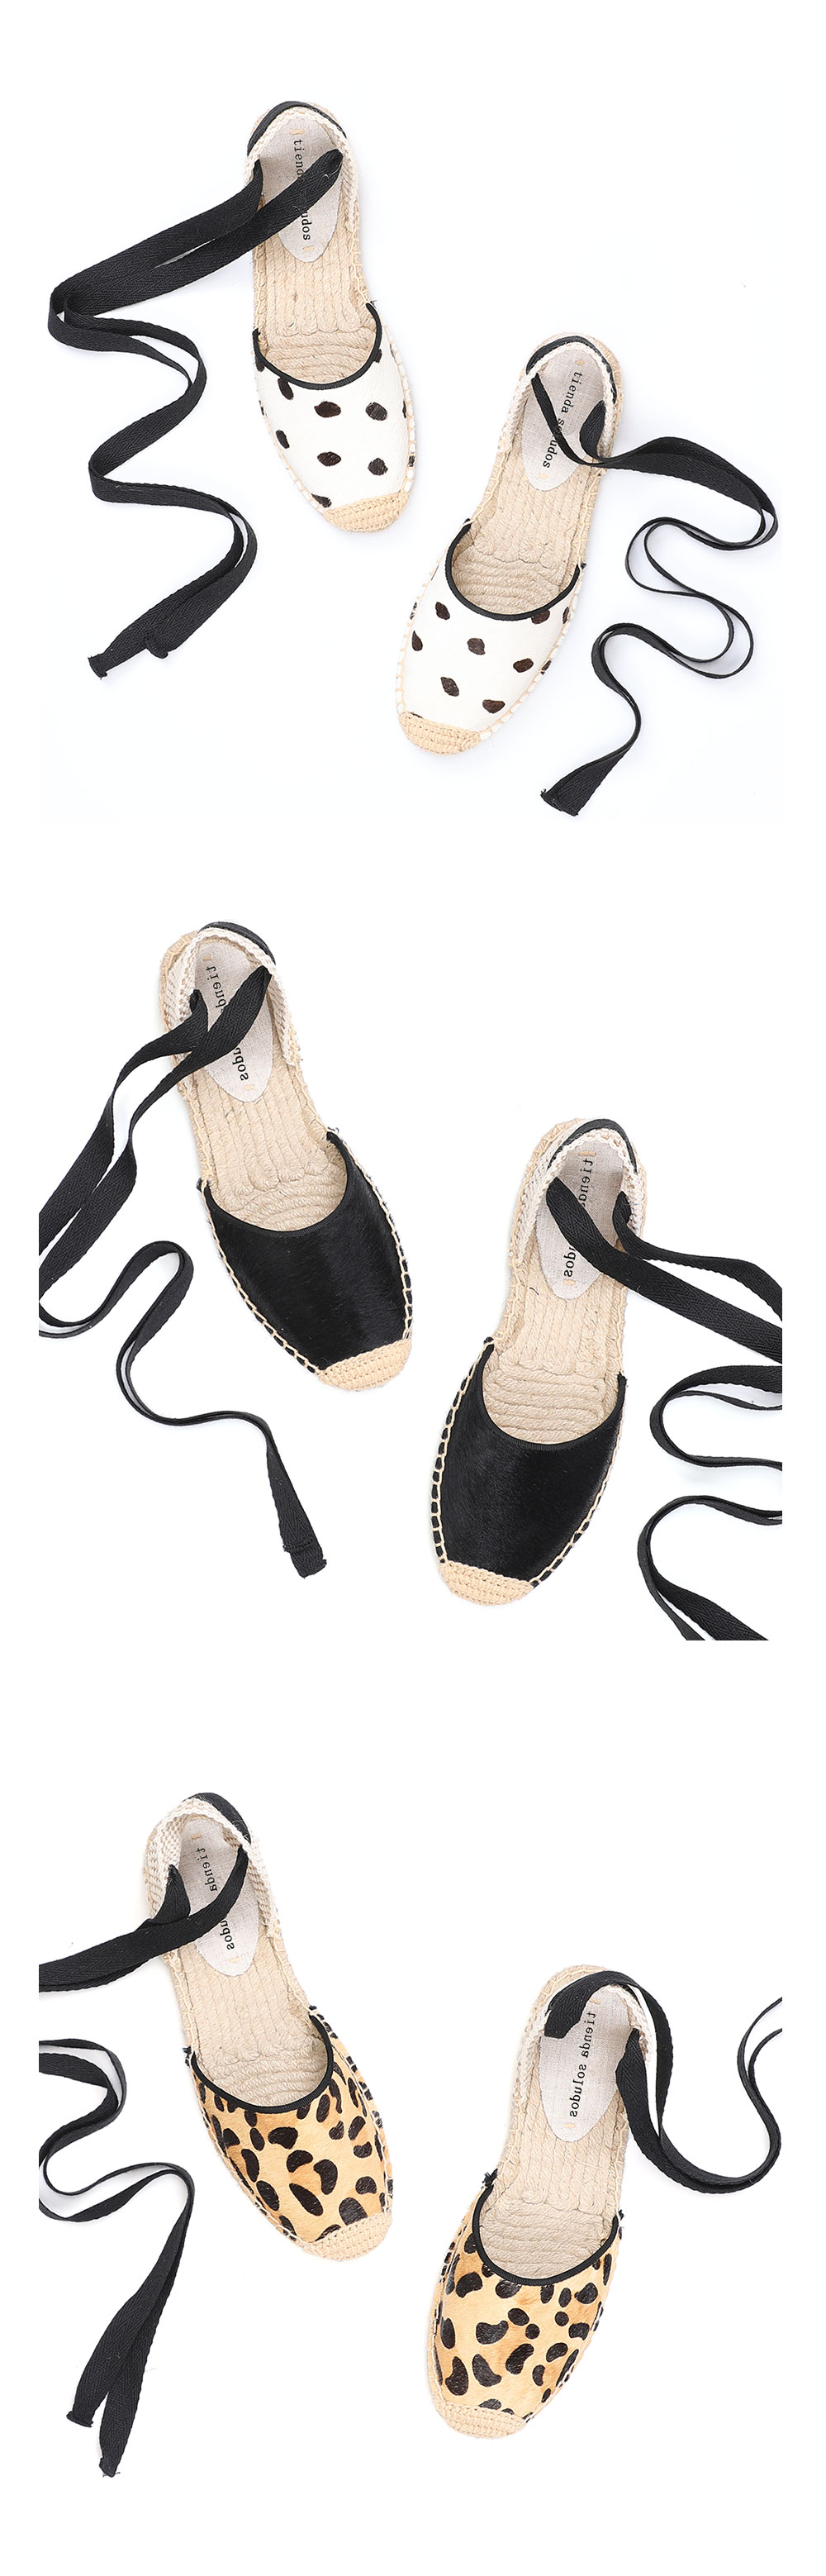 2021 Open Sapato Feminino Limited Hot Sale Horsehair T-strap Sapatos Mulher Sandals Sandalias 2021womens Espadrilles Flat Shoes